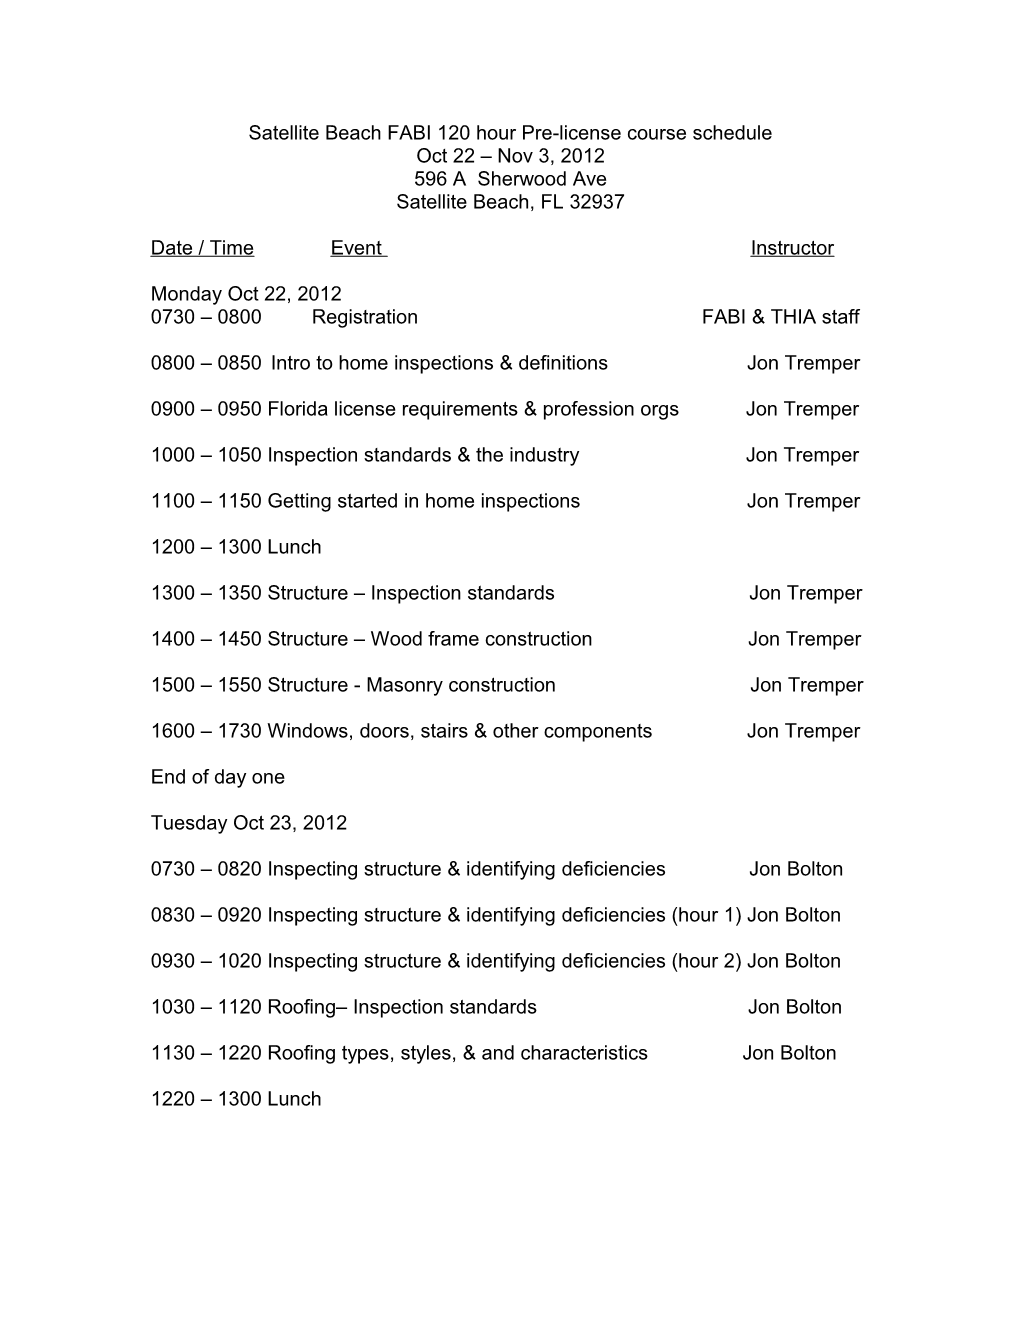 Daytona Beach FABI 120 Hour Pre-License Course Schedule